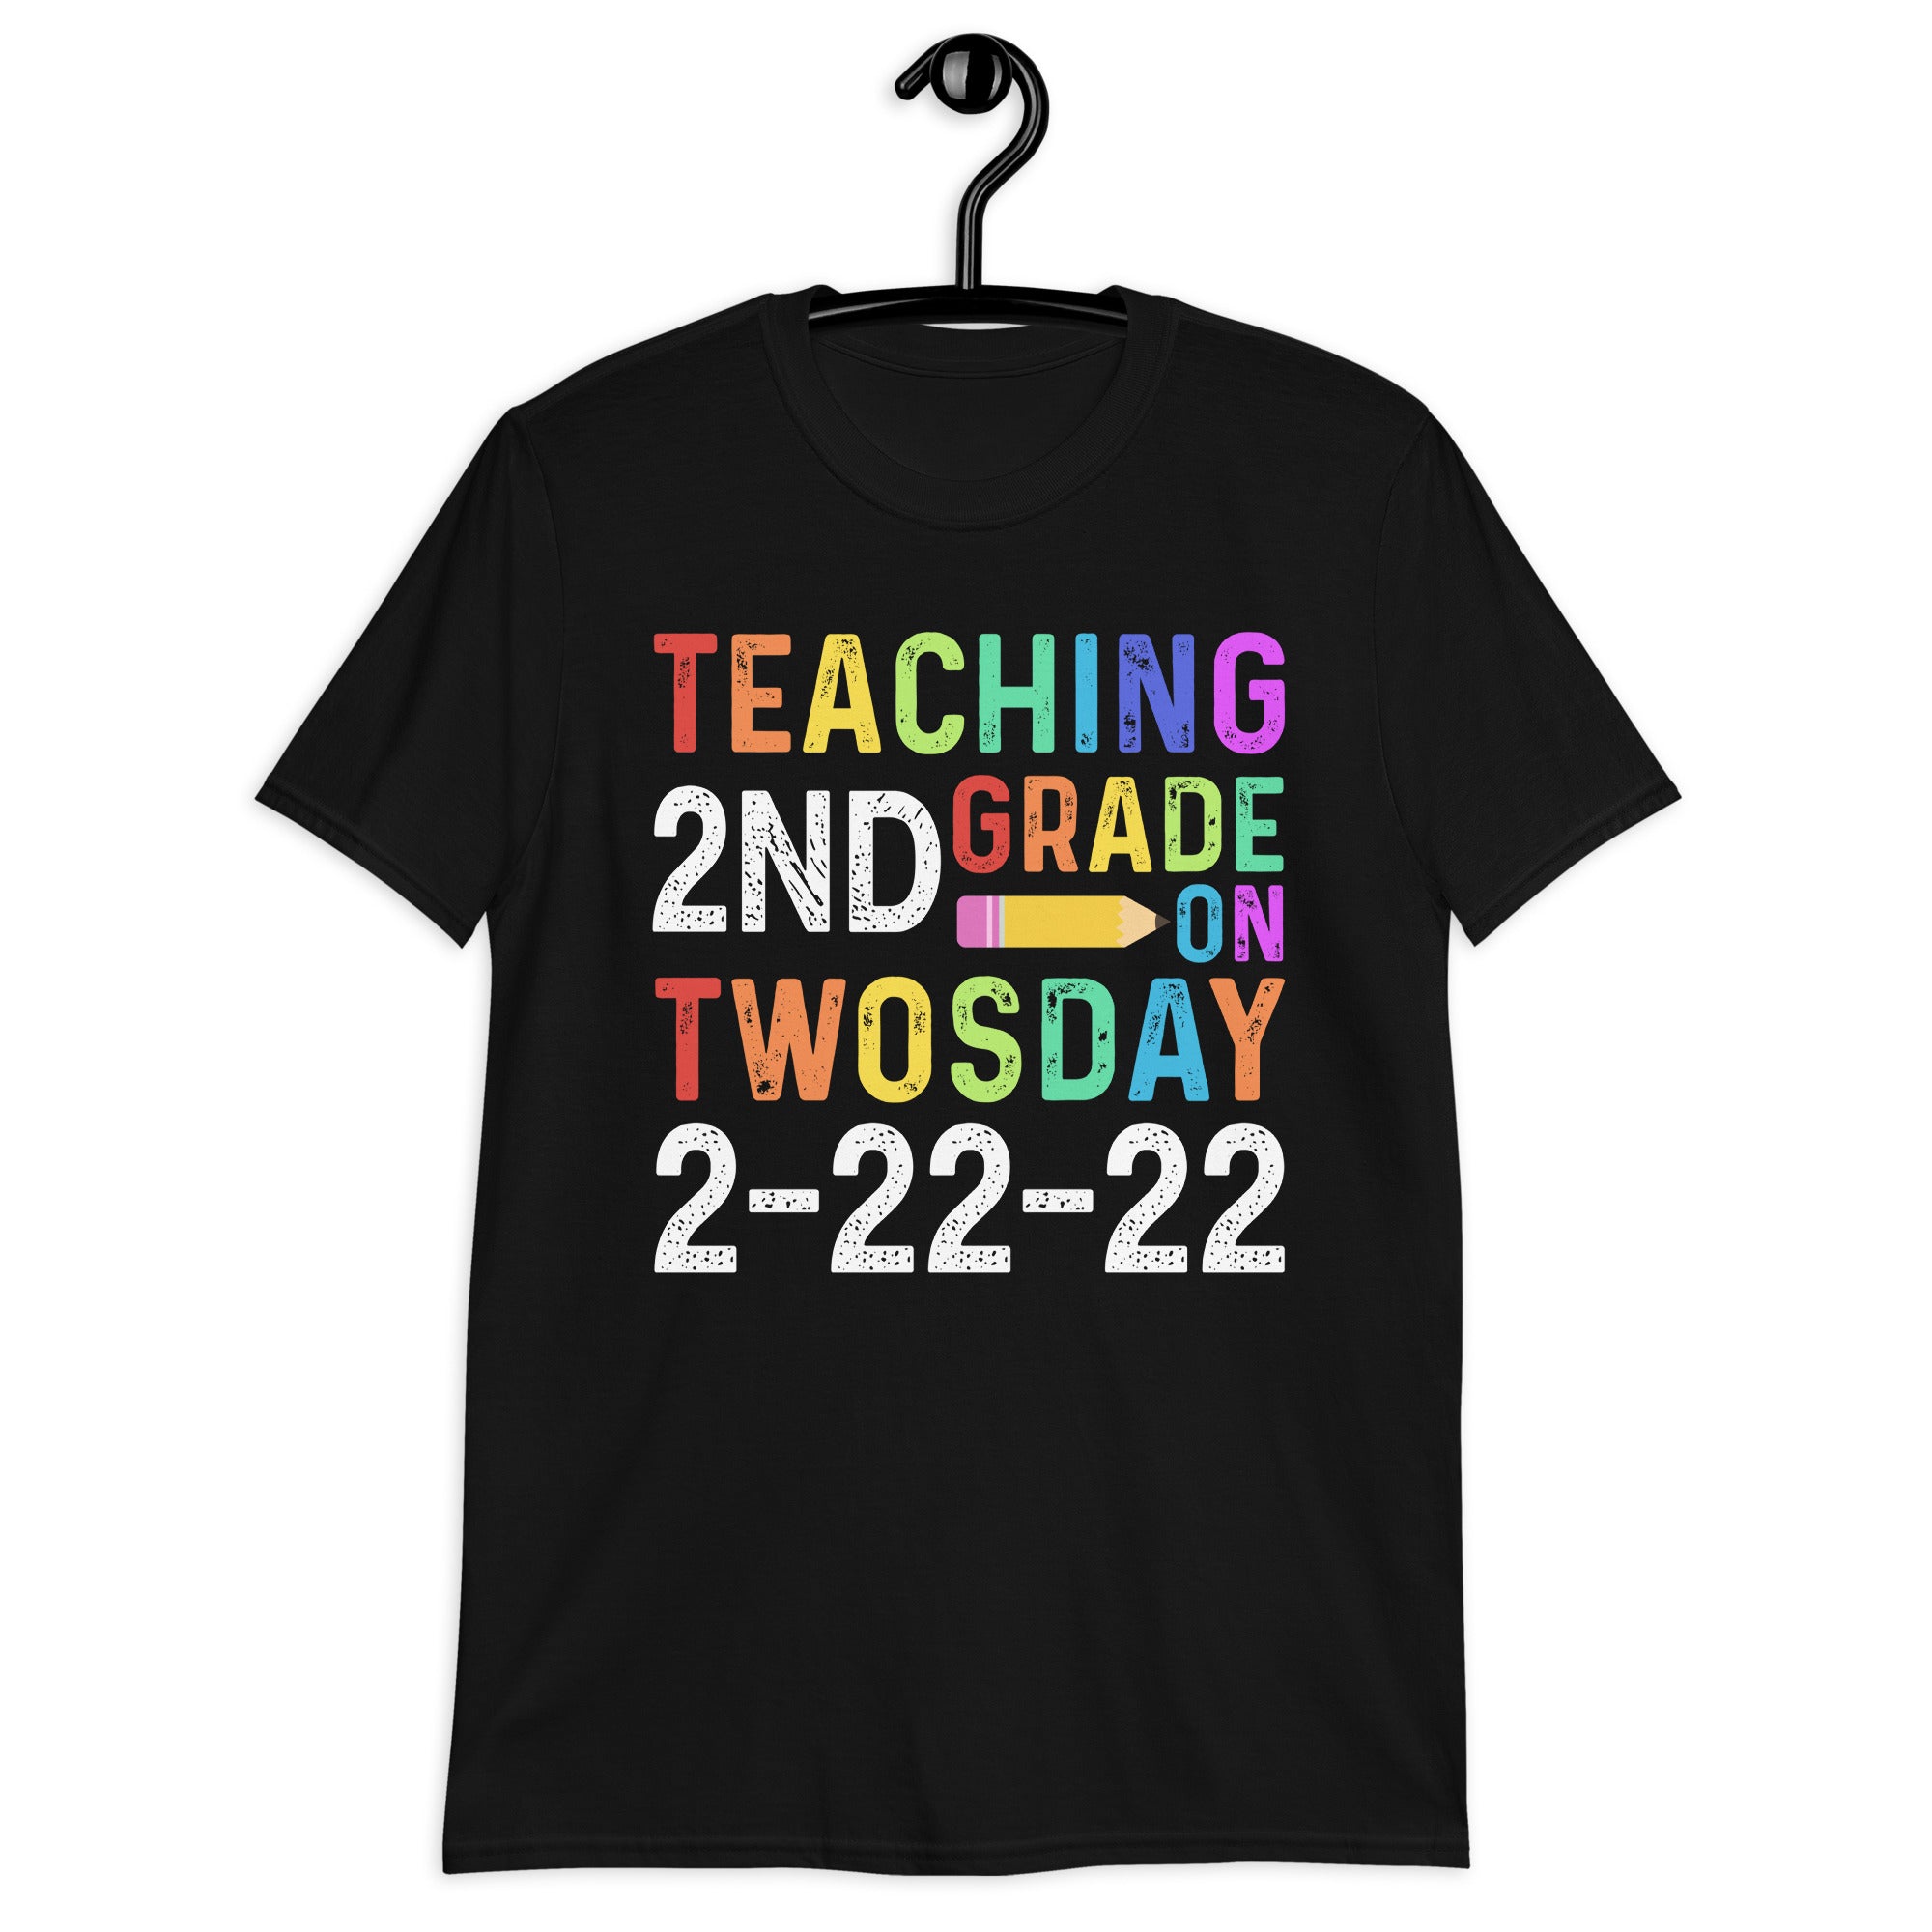 Teaching Twosday, 2-22-22, Twosday Shirt, Teaching 2nd Grade on Twosday, Second Grade Teacher Tshirt, Happy Twosday, 2nd Grade Teacher Gifts - Madeinsea©